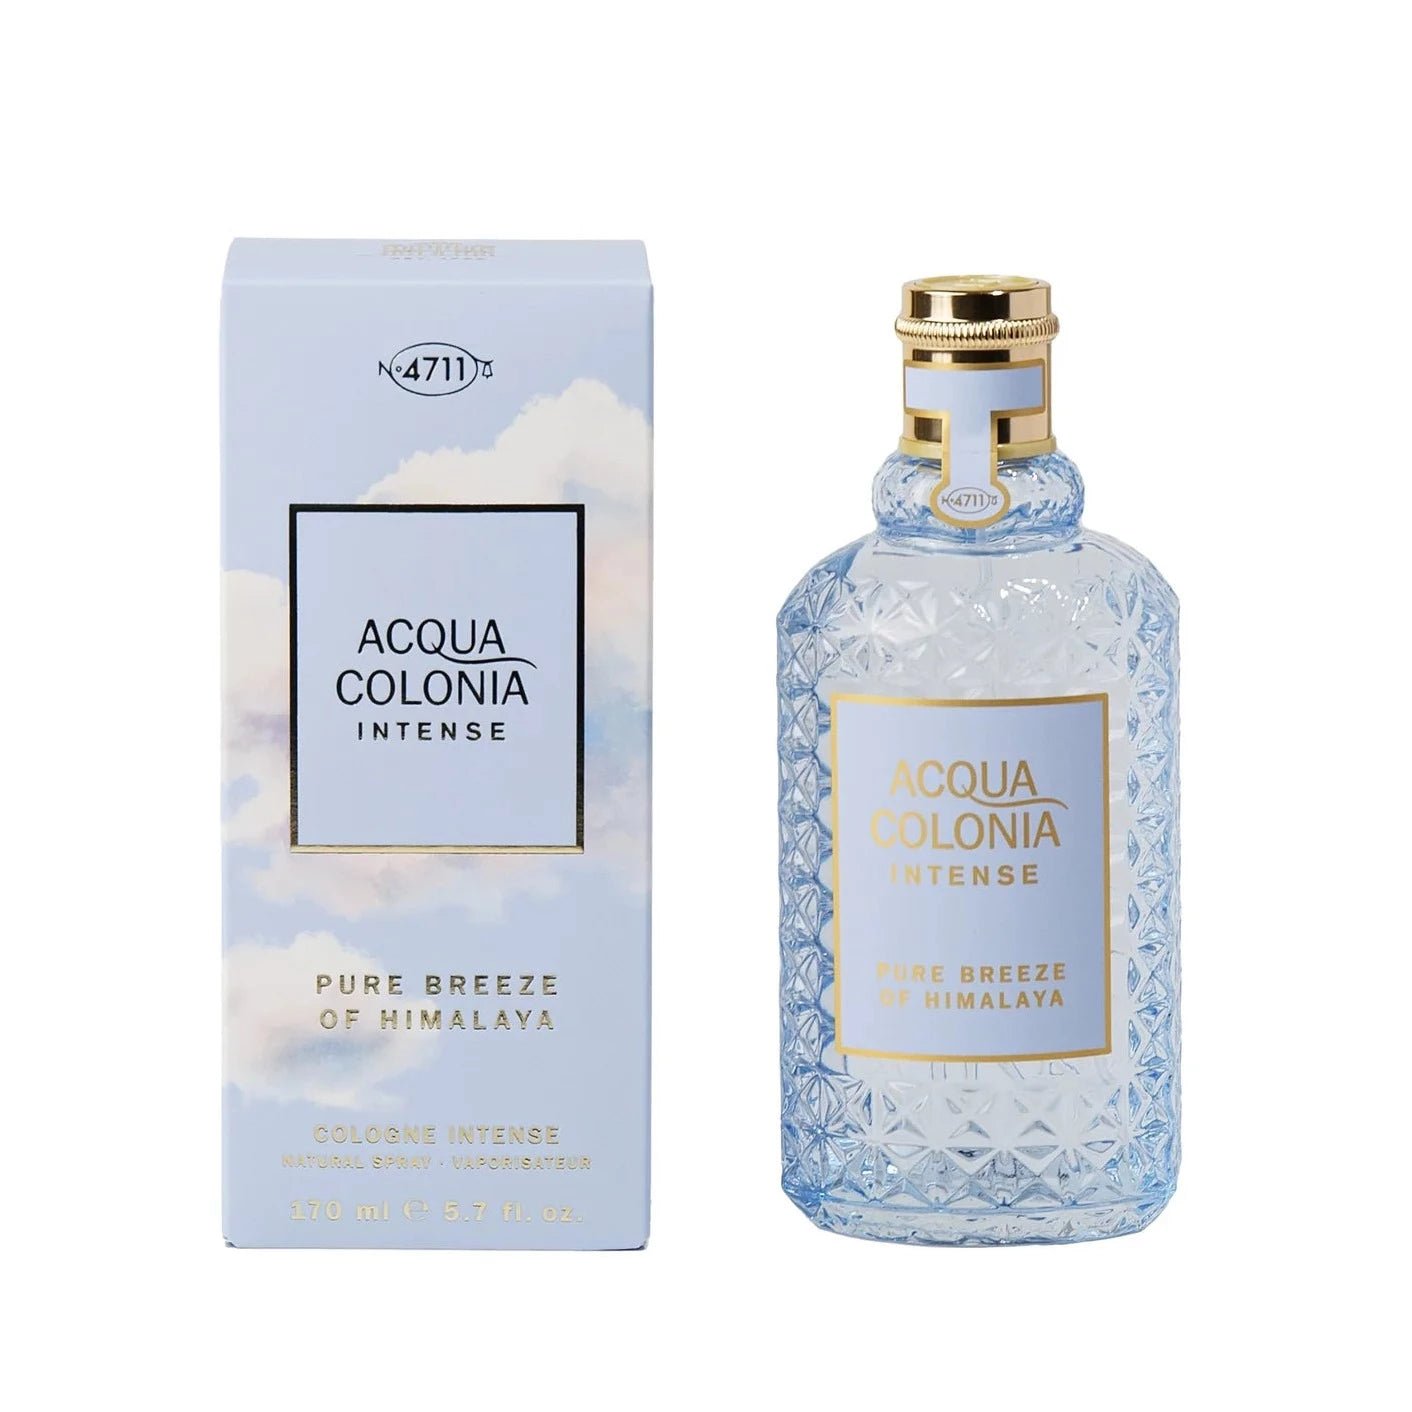 No. 4711 Acqua Colonia Intense Pure Breeze Of Himalaya EDC | My Perfume Shop Australia